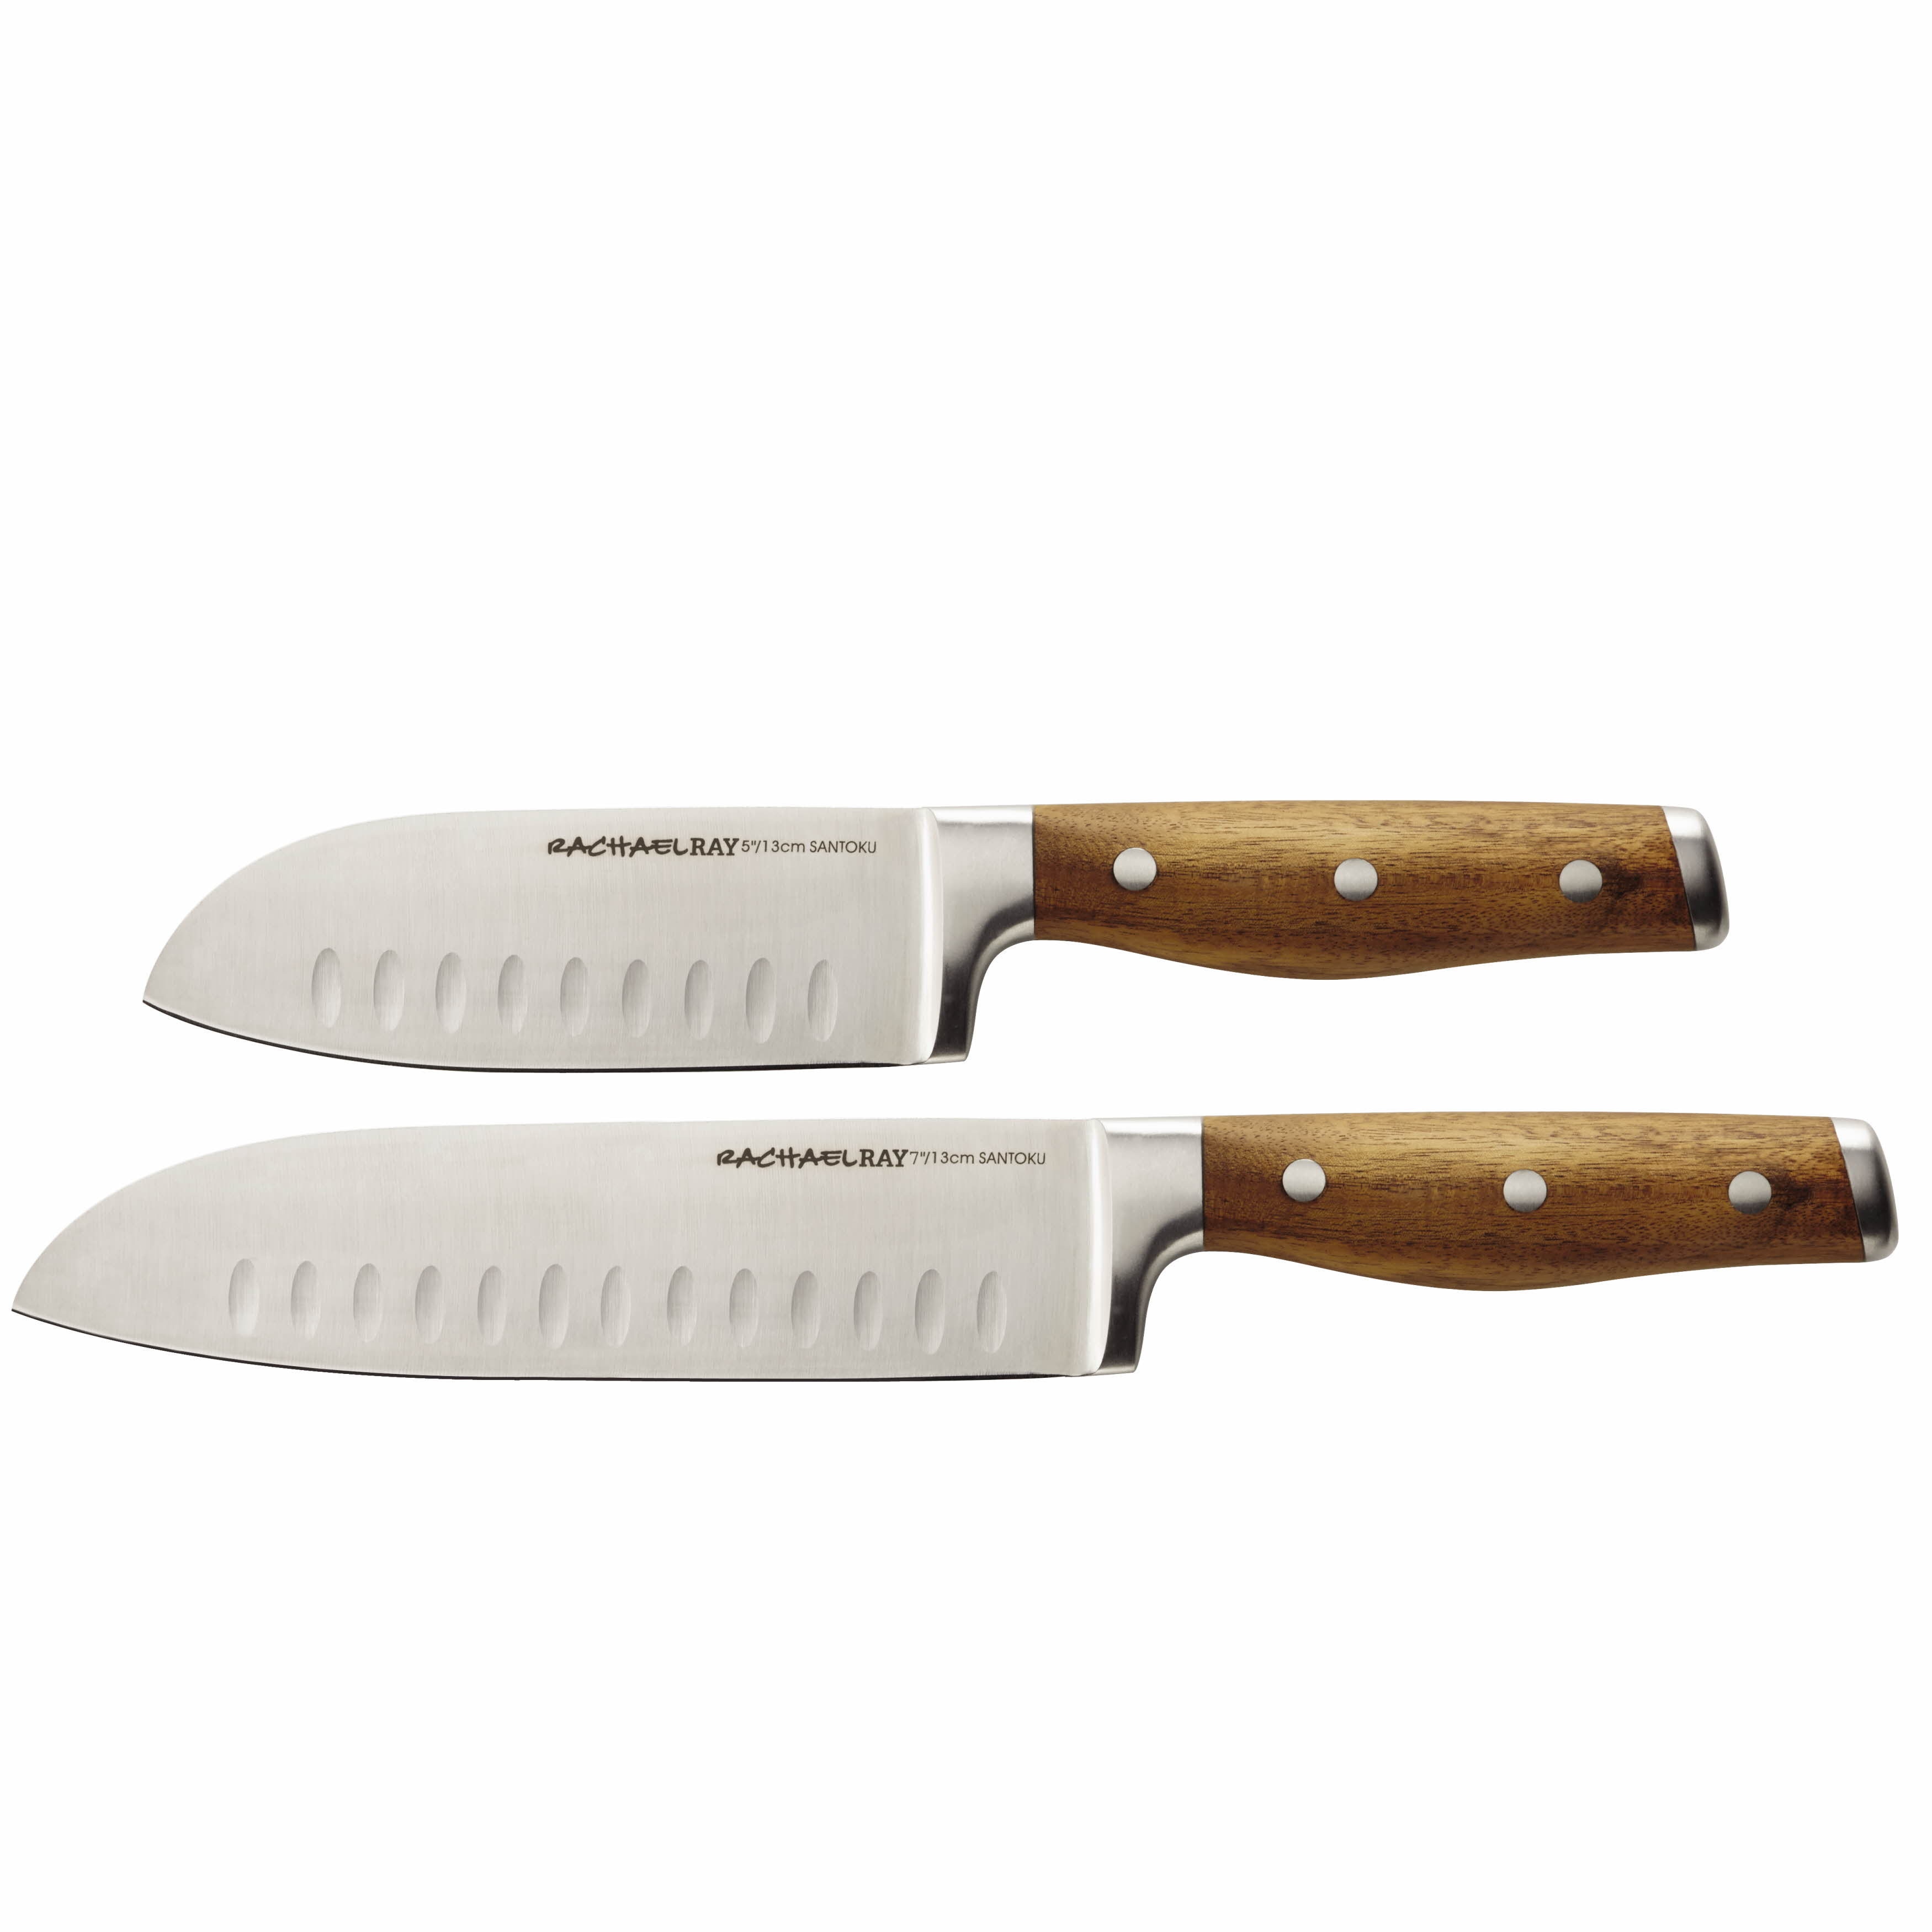 https://ak1.ostkcdn.com/images/products/9725802/Rachael-Ray-Cucina-Cutlery-2-Piece-Japanese-Stainless-Steel-Santoku-Knife-Set-with-Acacia-Handles-94d98fd1-660a-4015-95b4-209bab79bb34.jpg